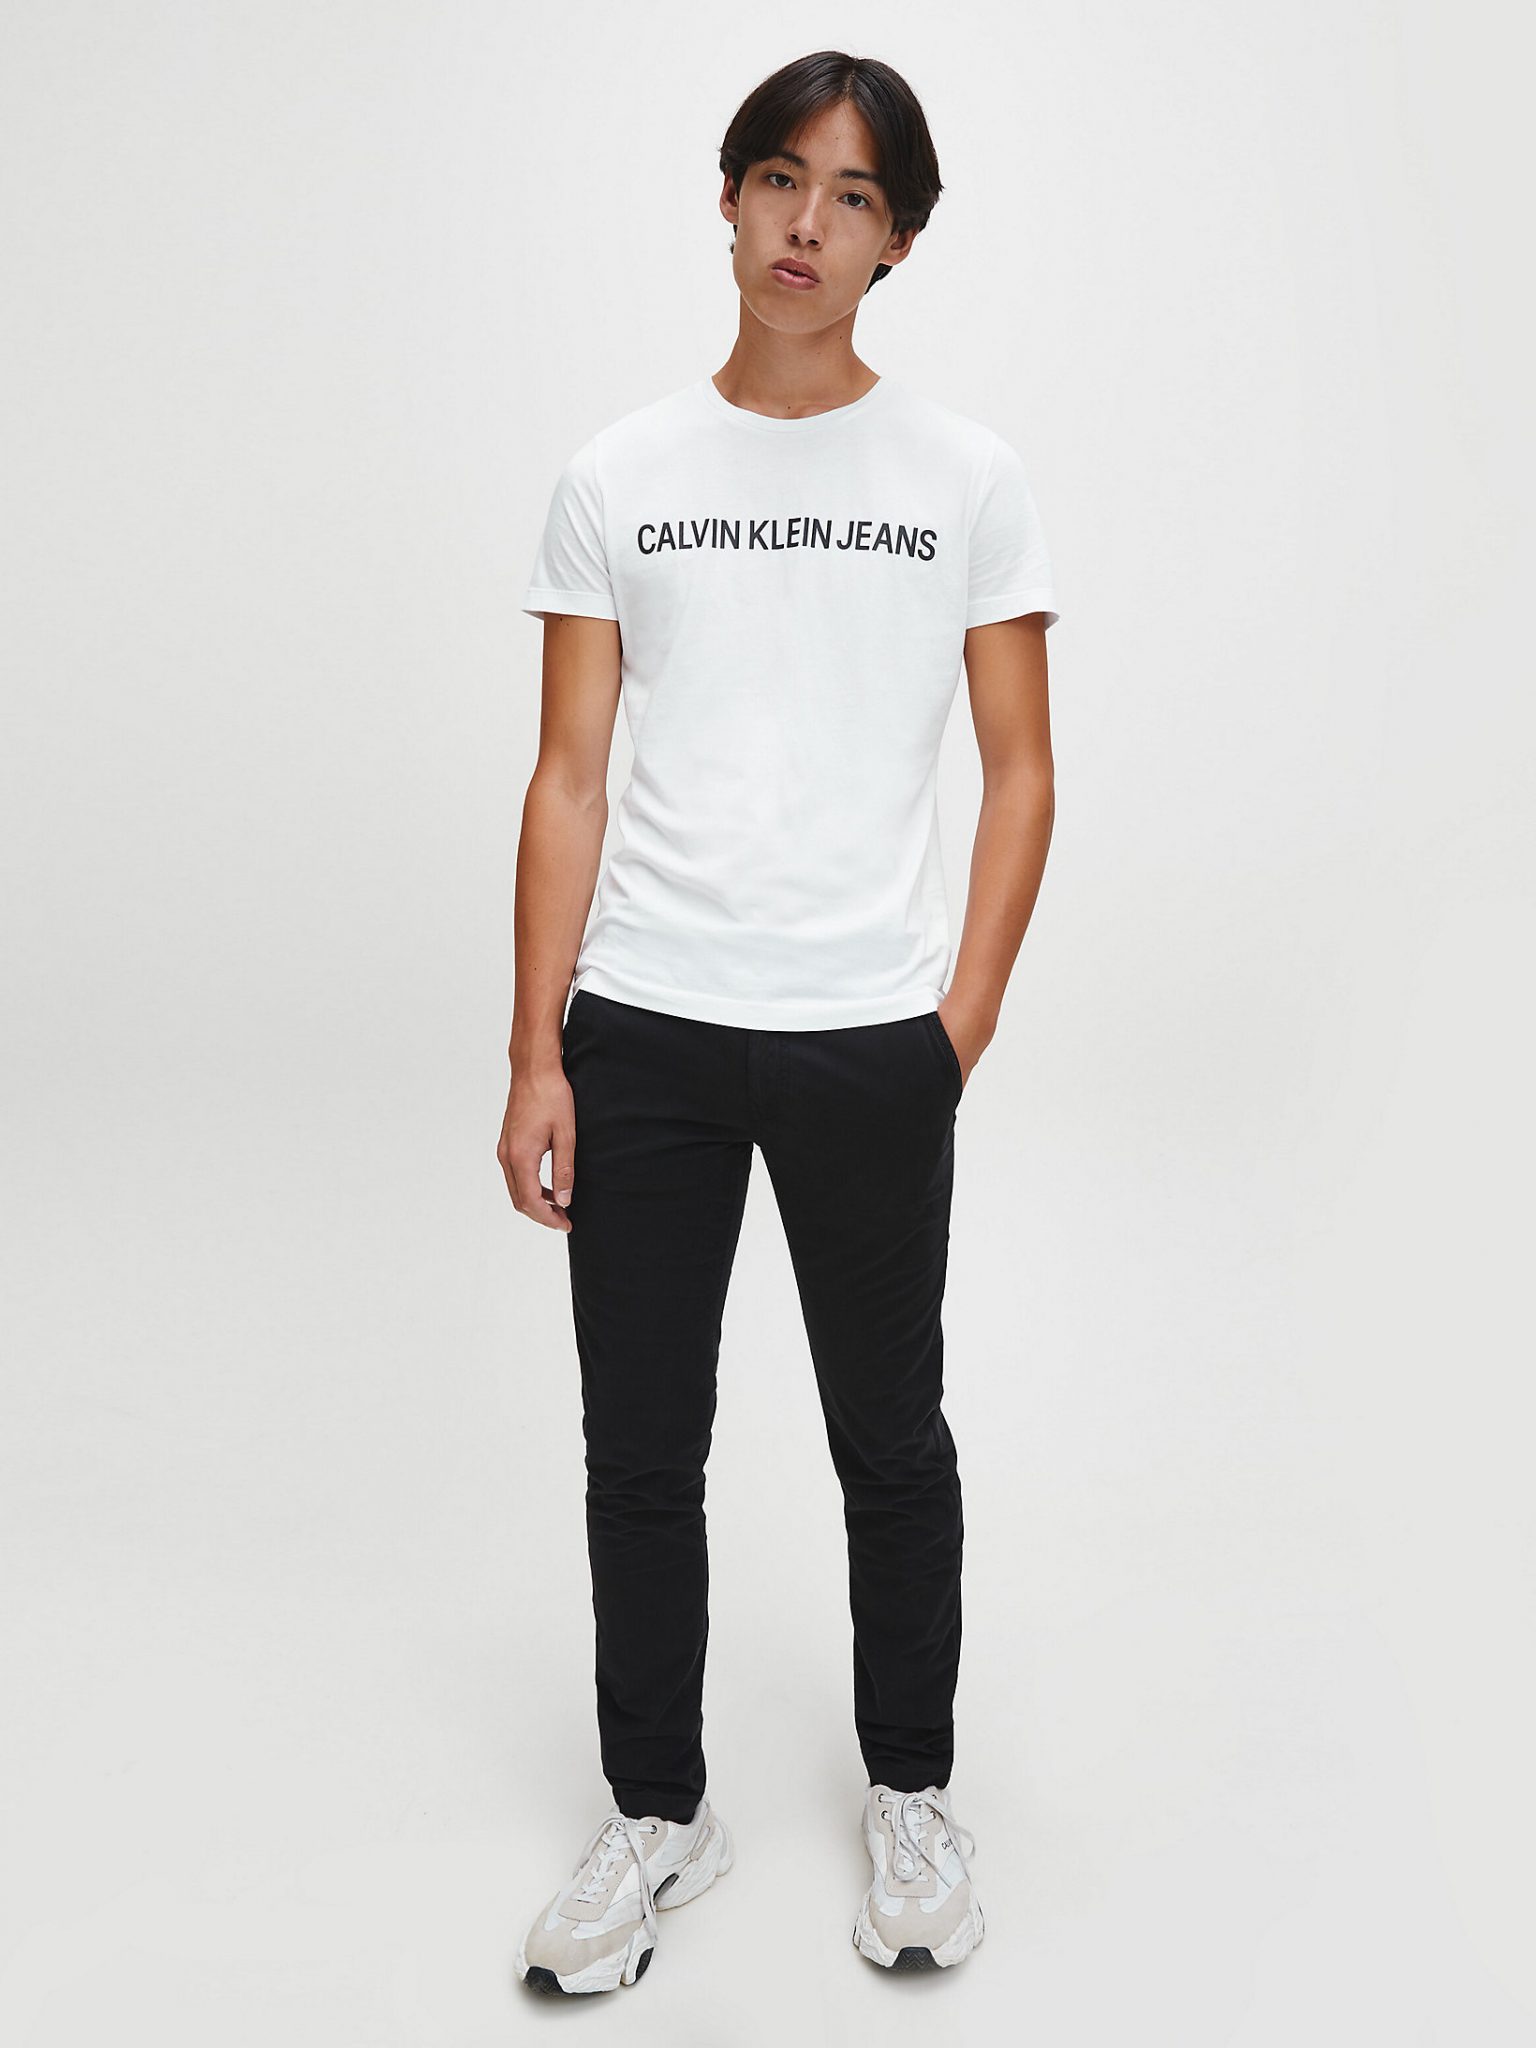 Buy Calvin Klein Institutional Fashion - Scandinavian Bright T-shirt White logo Store